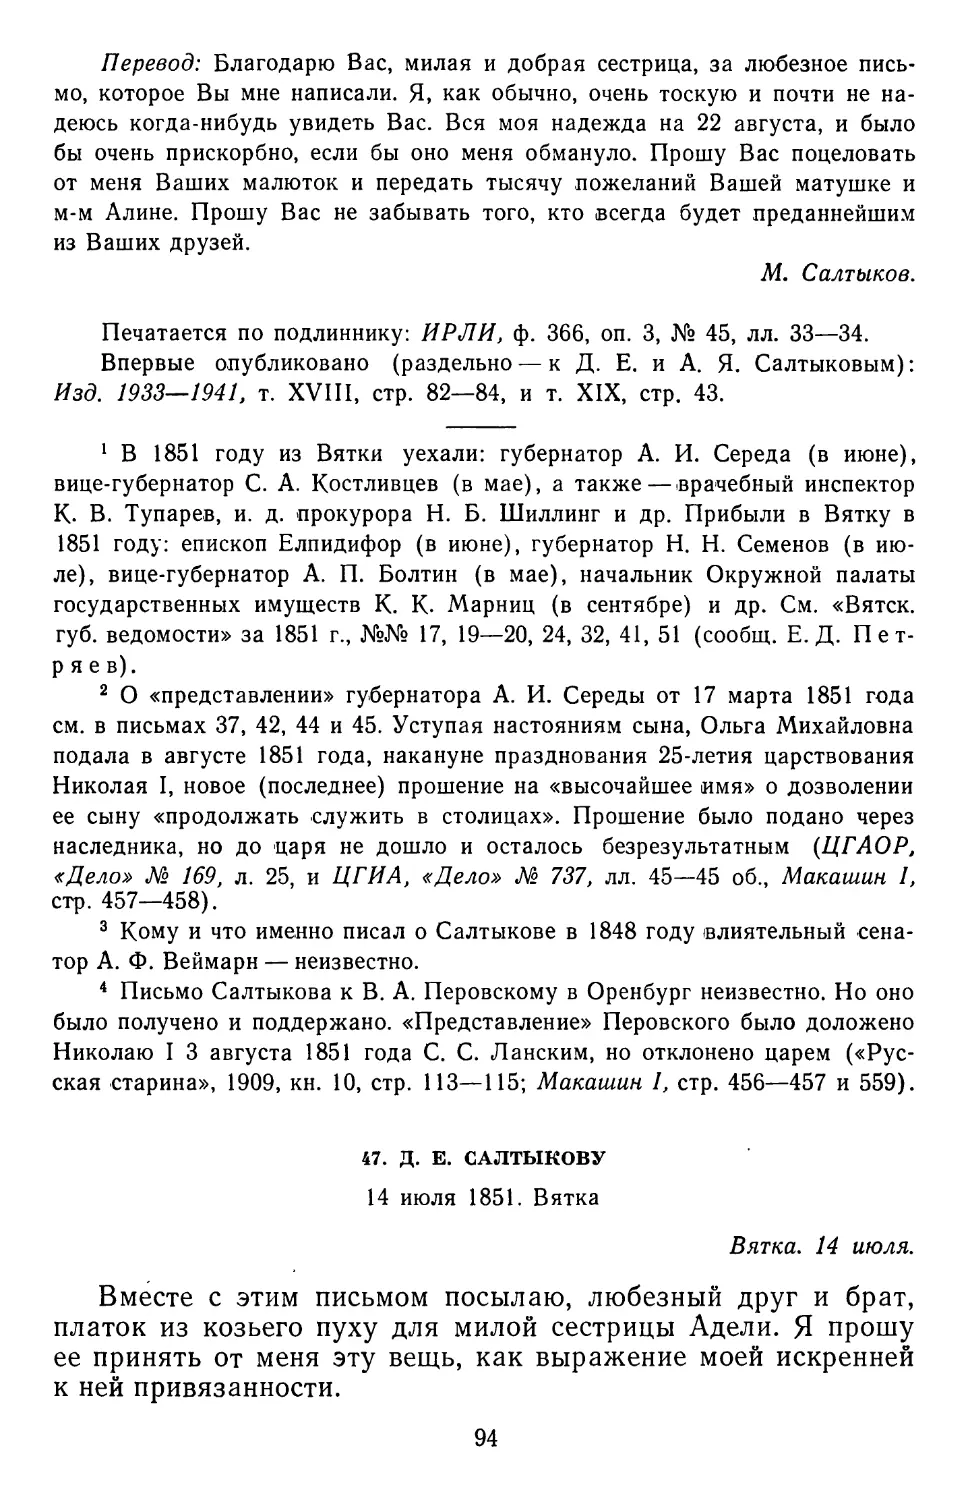 47.Д. Е. Салтыкову.14июля 1851. Вятка